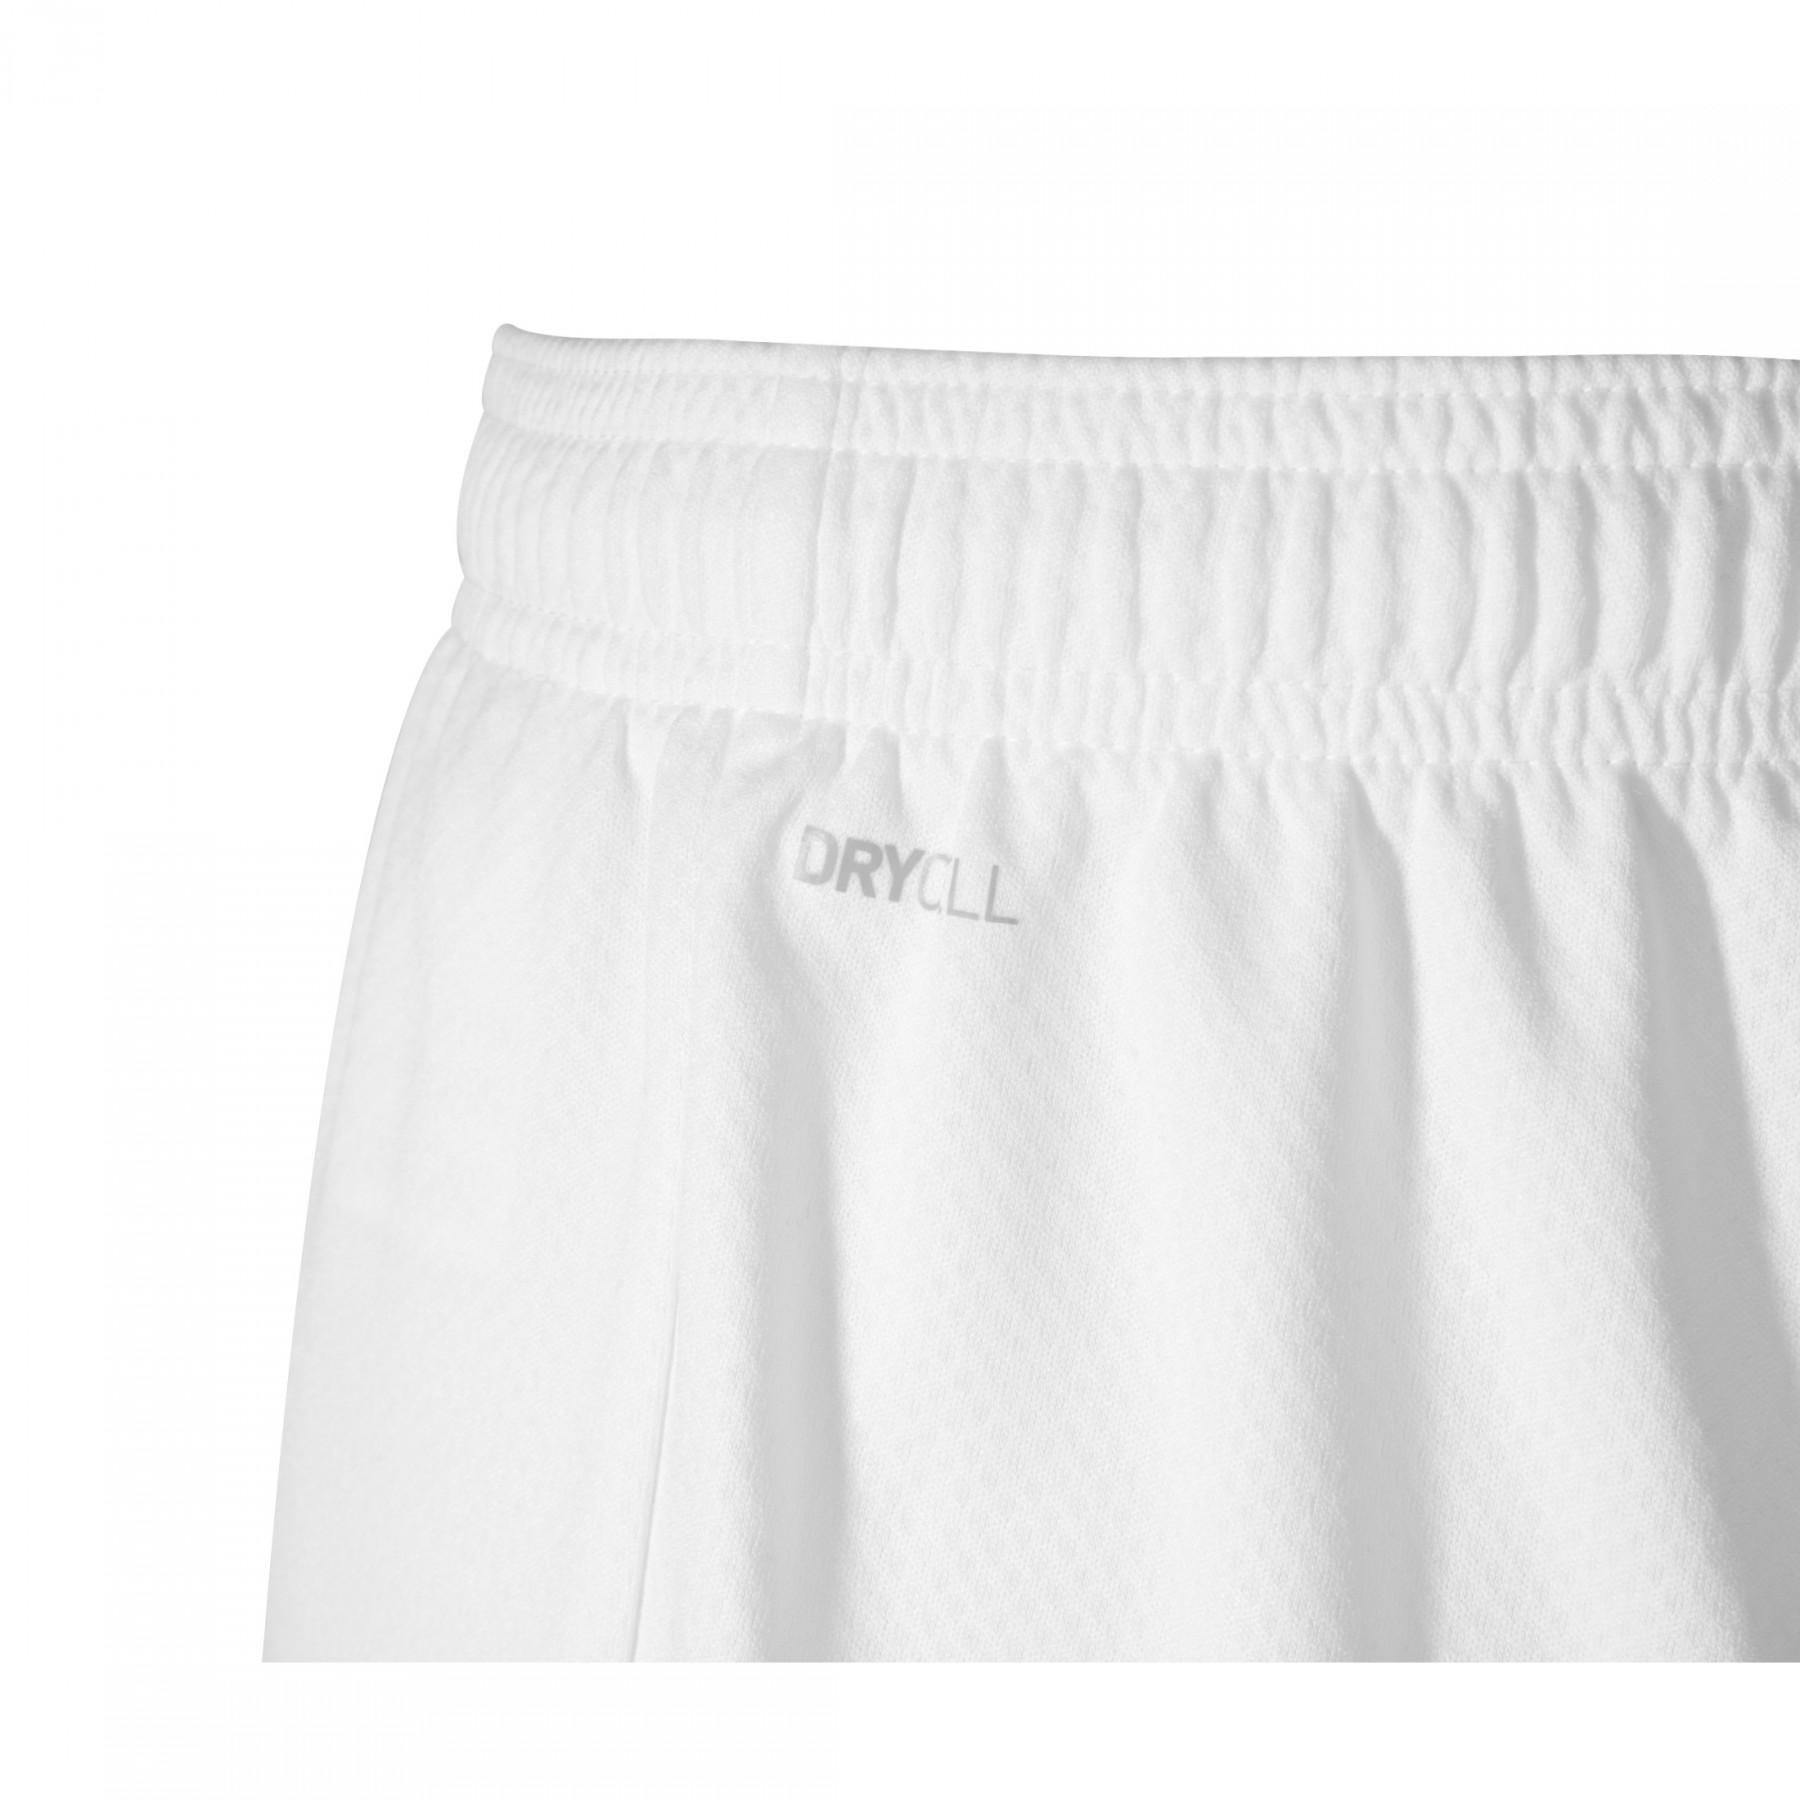 Women's shorts OM 2019/20